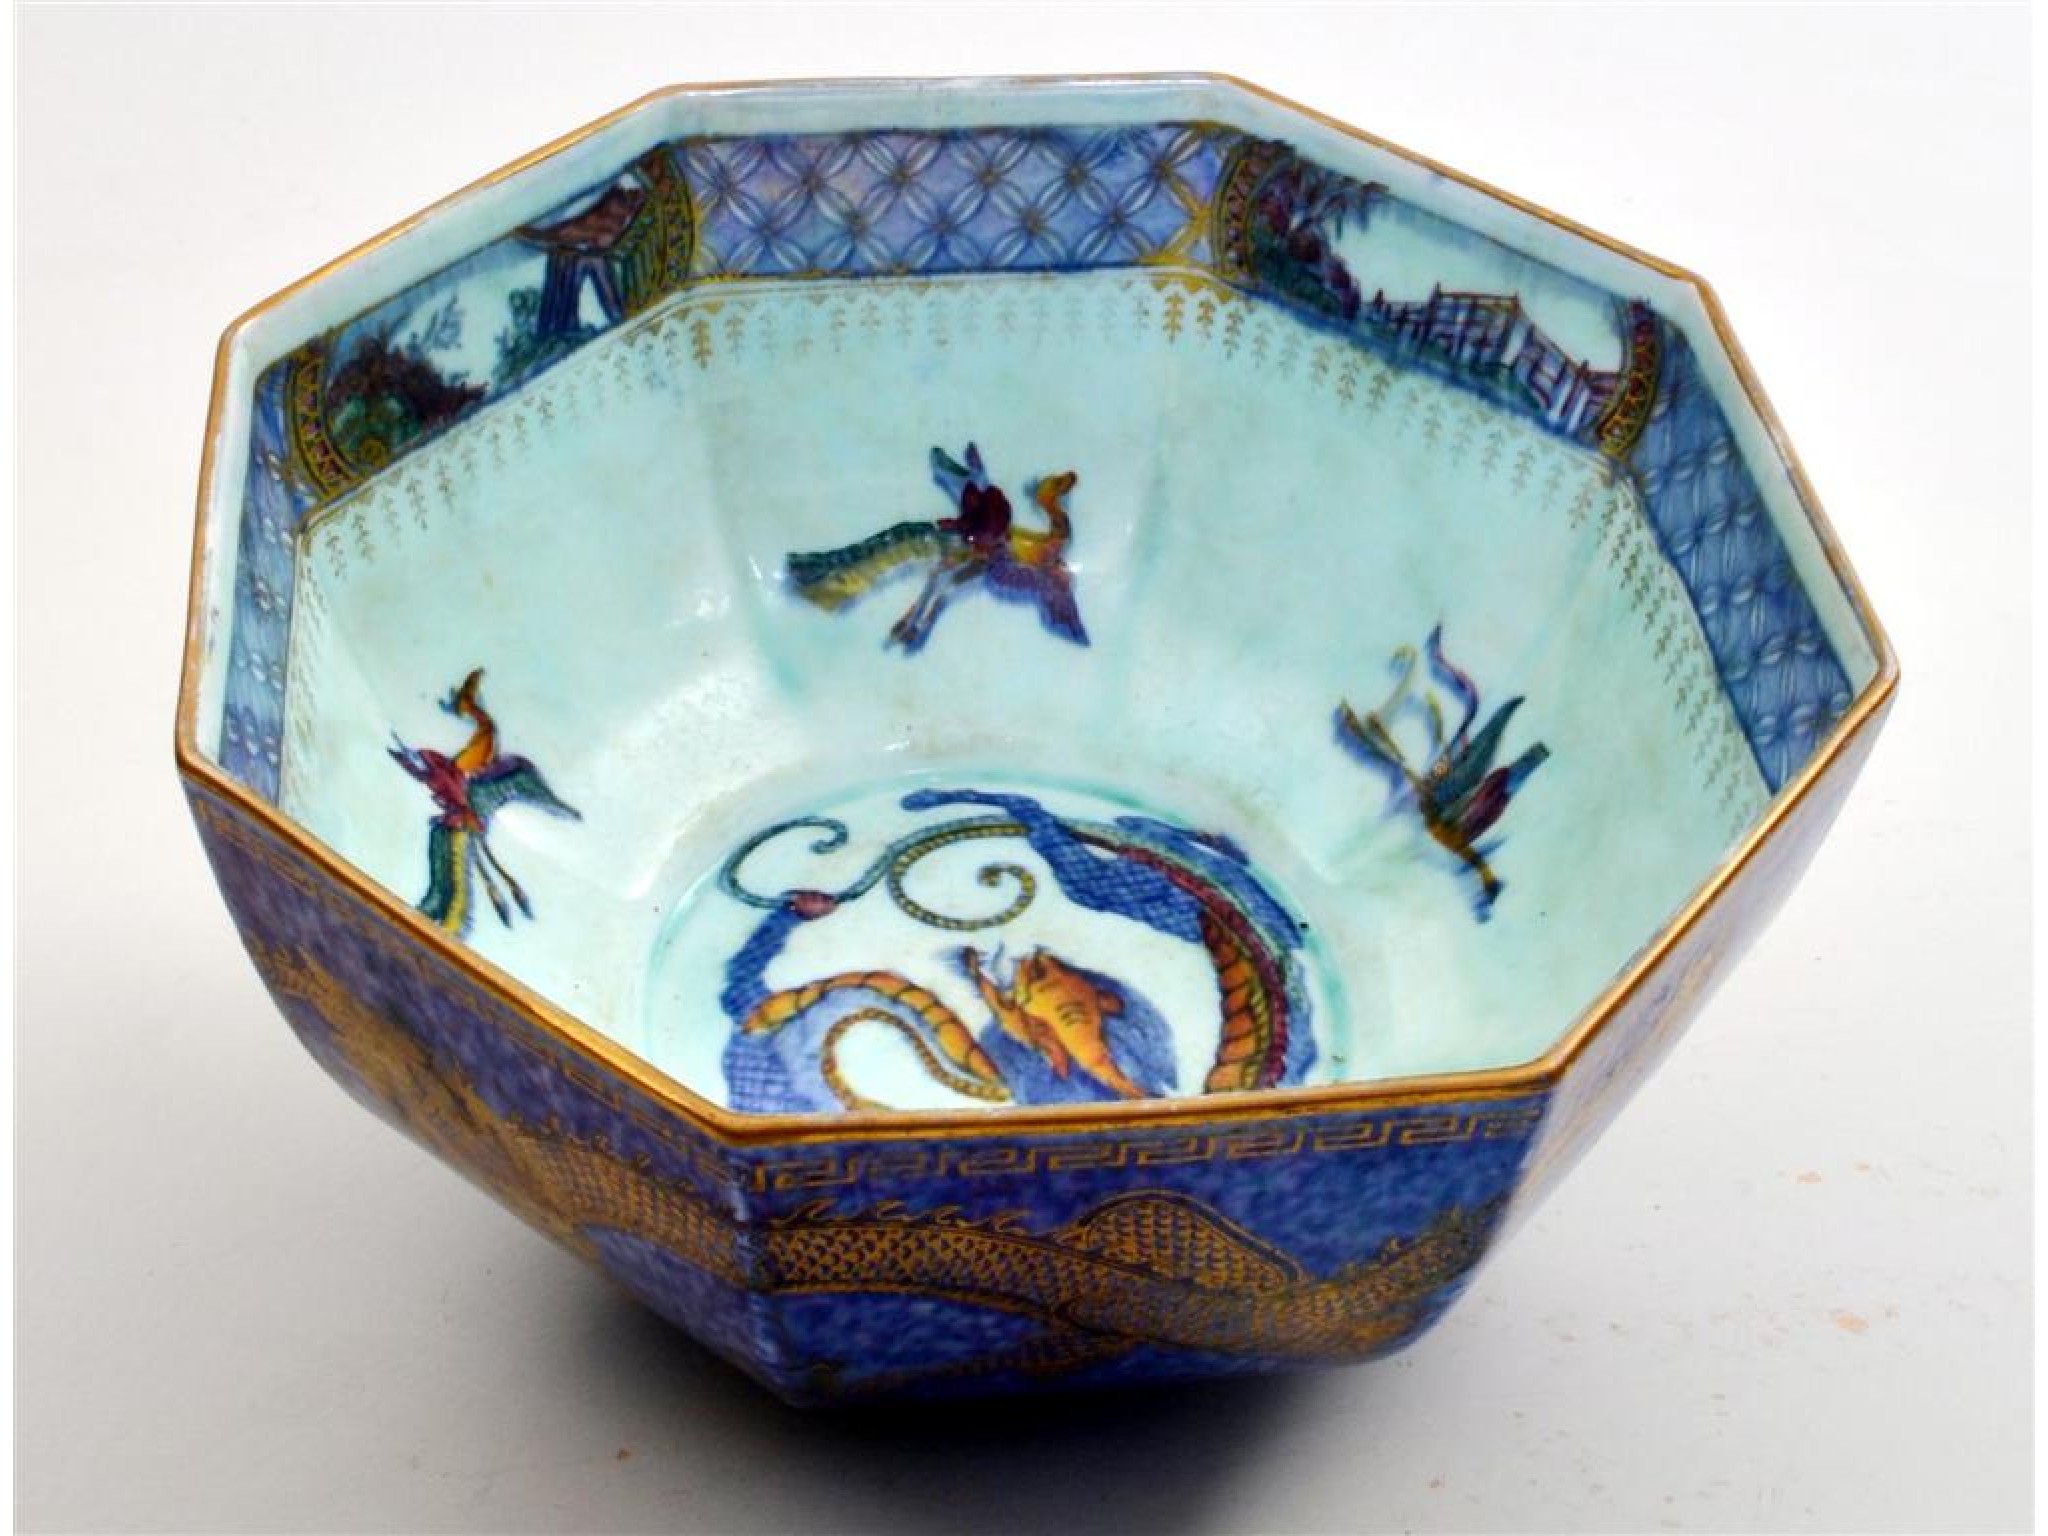 Daisy Makeig-Jones for Wedgwood a Fairyland Lustre octagonal lustre bowl, circa 1915.exterior on a m